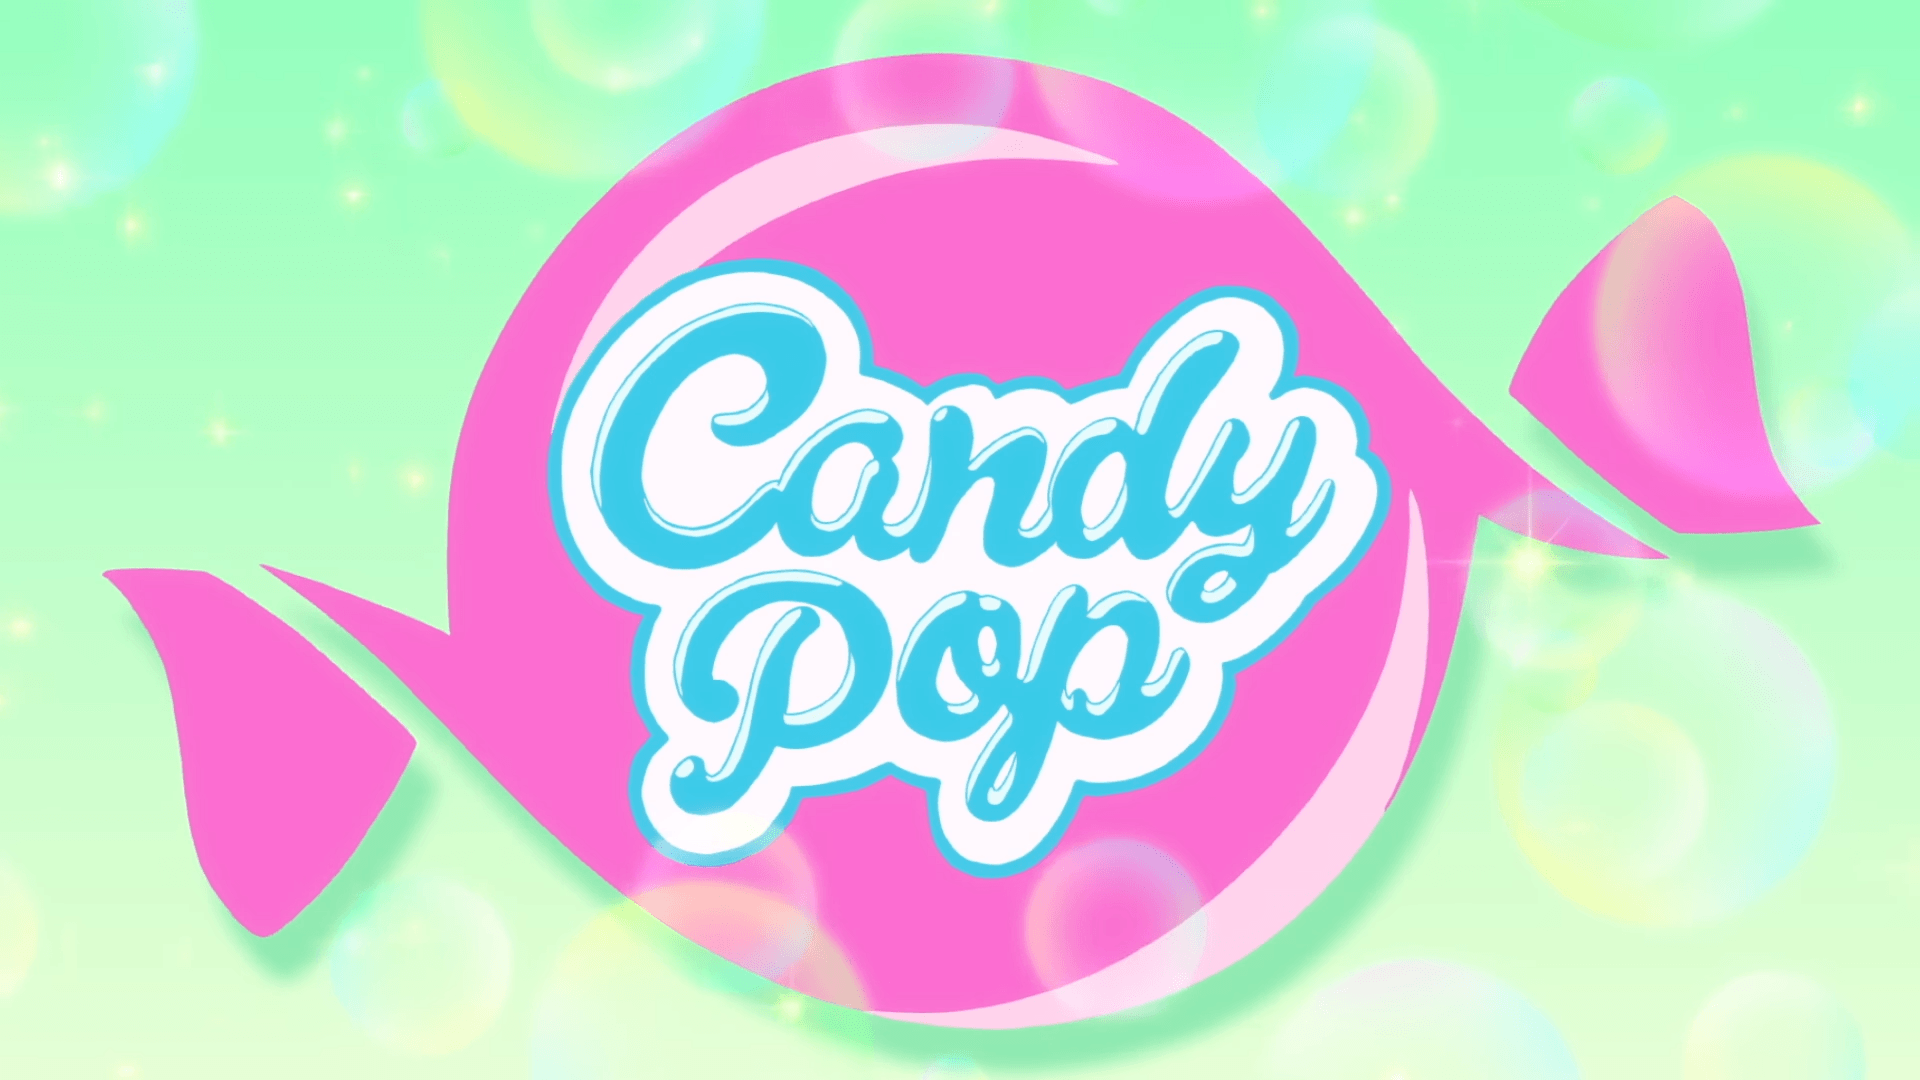 Steam Workshop - TWICE「Candy Pop」Music Video